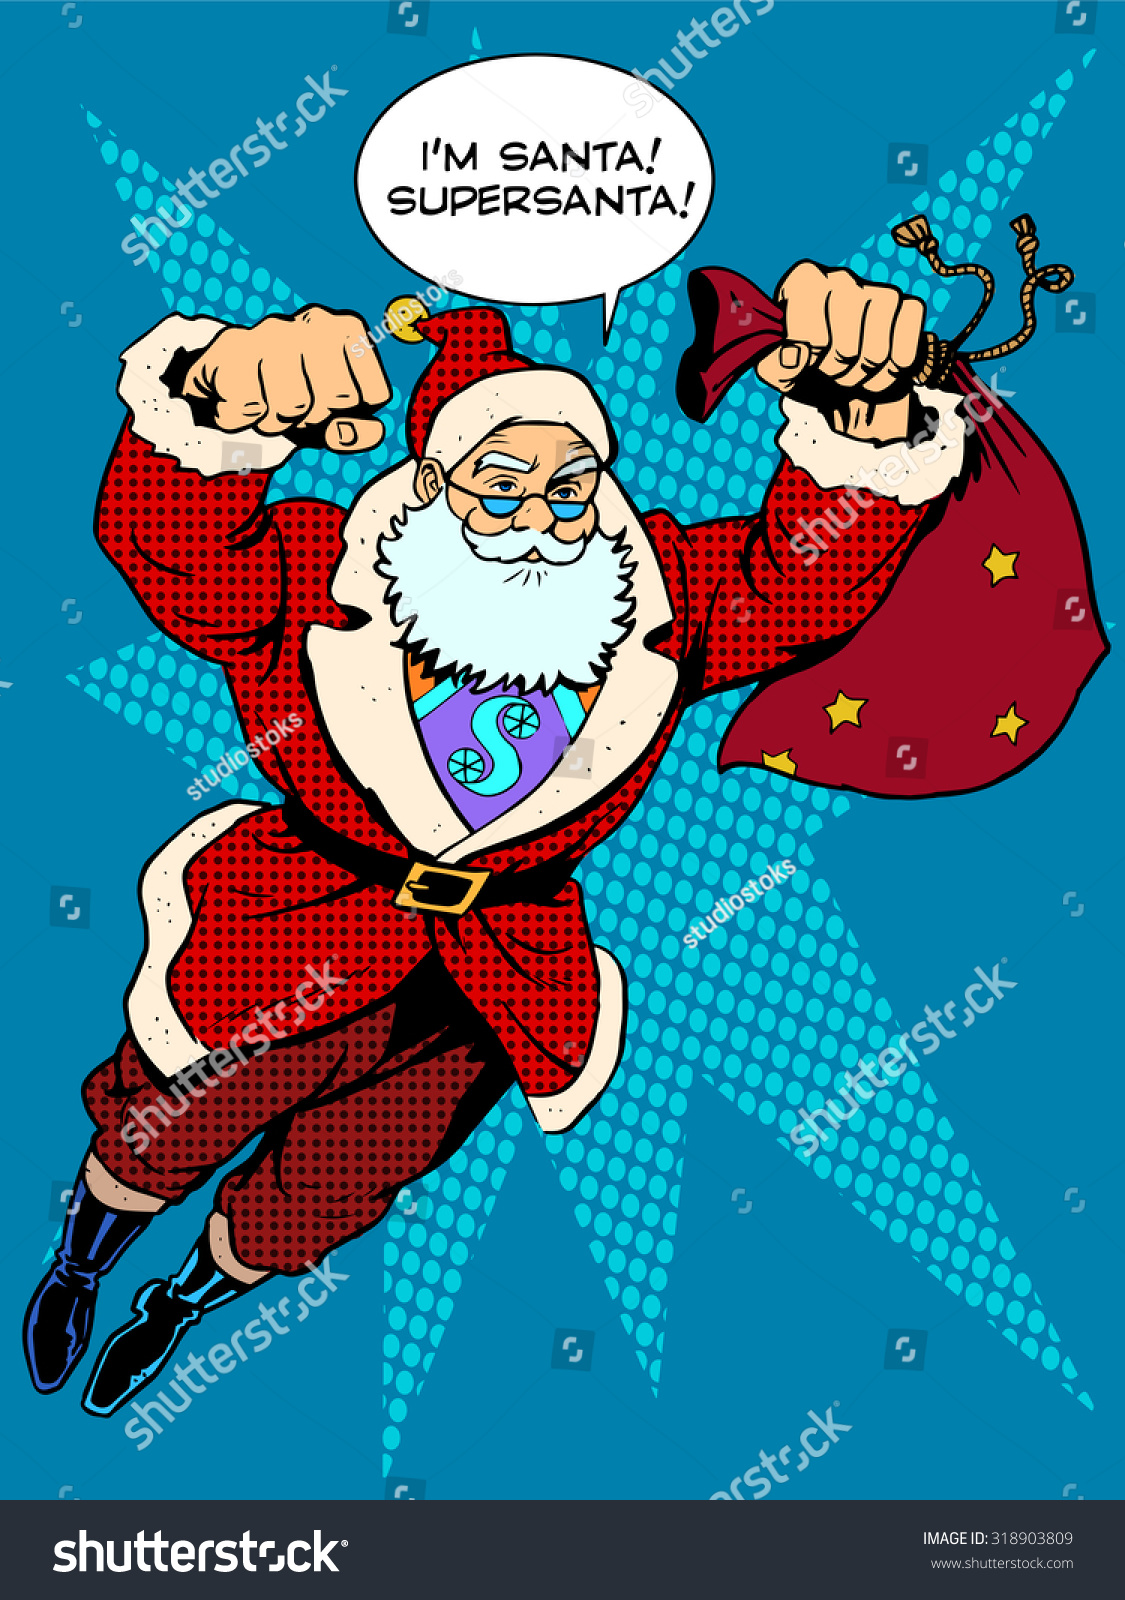 Santa Claus is flying with ts like a superhero Retro style pop art